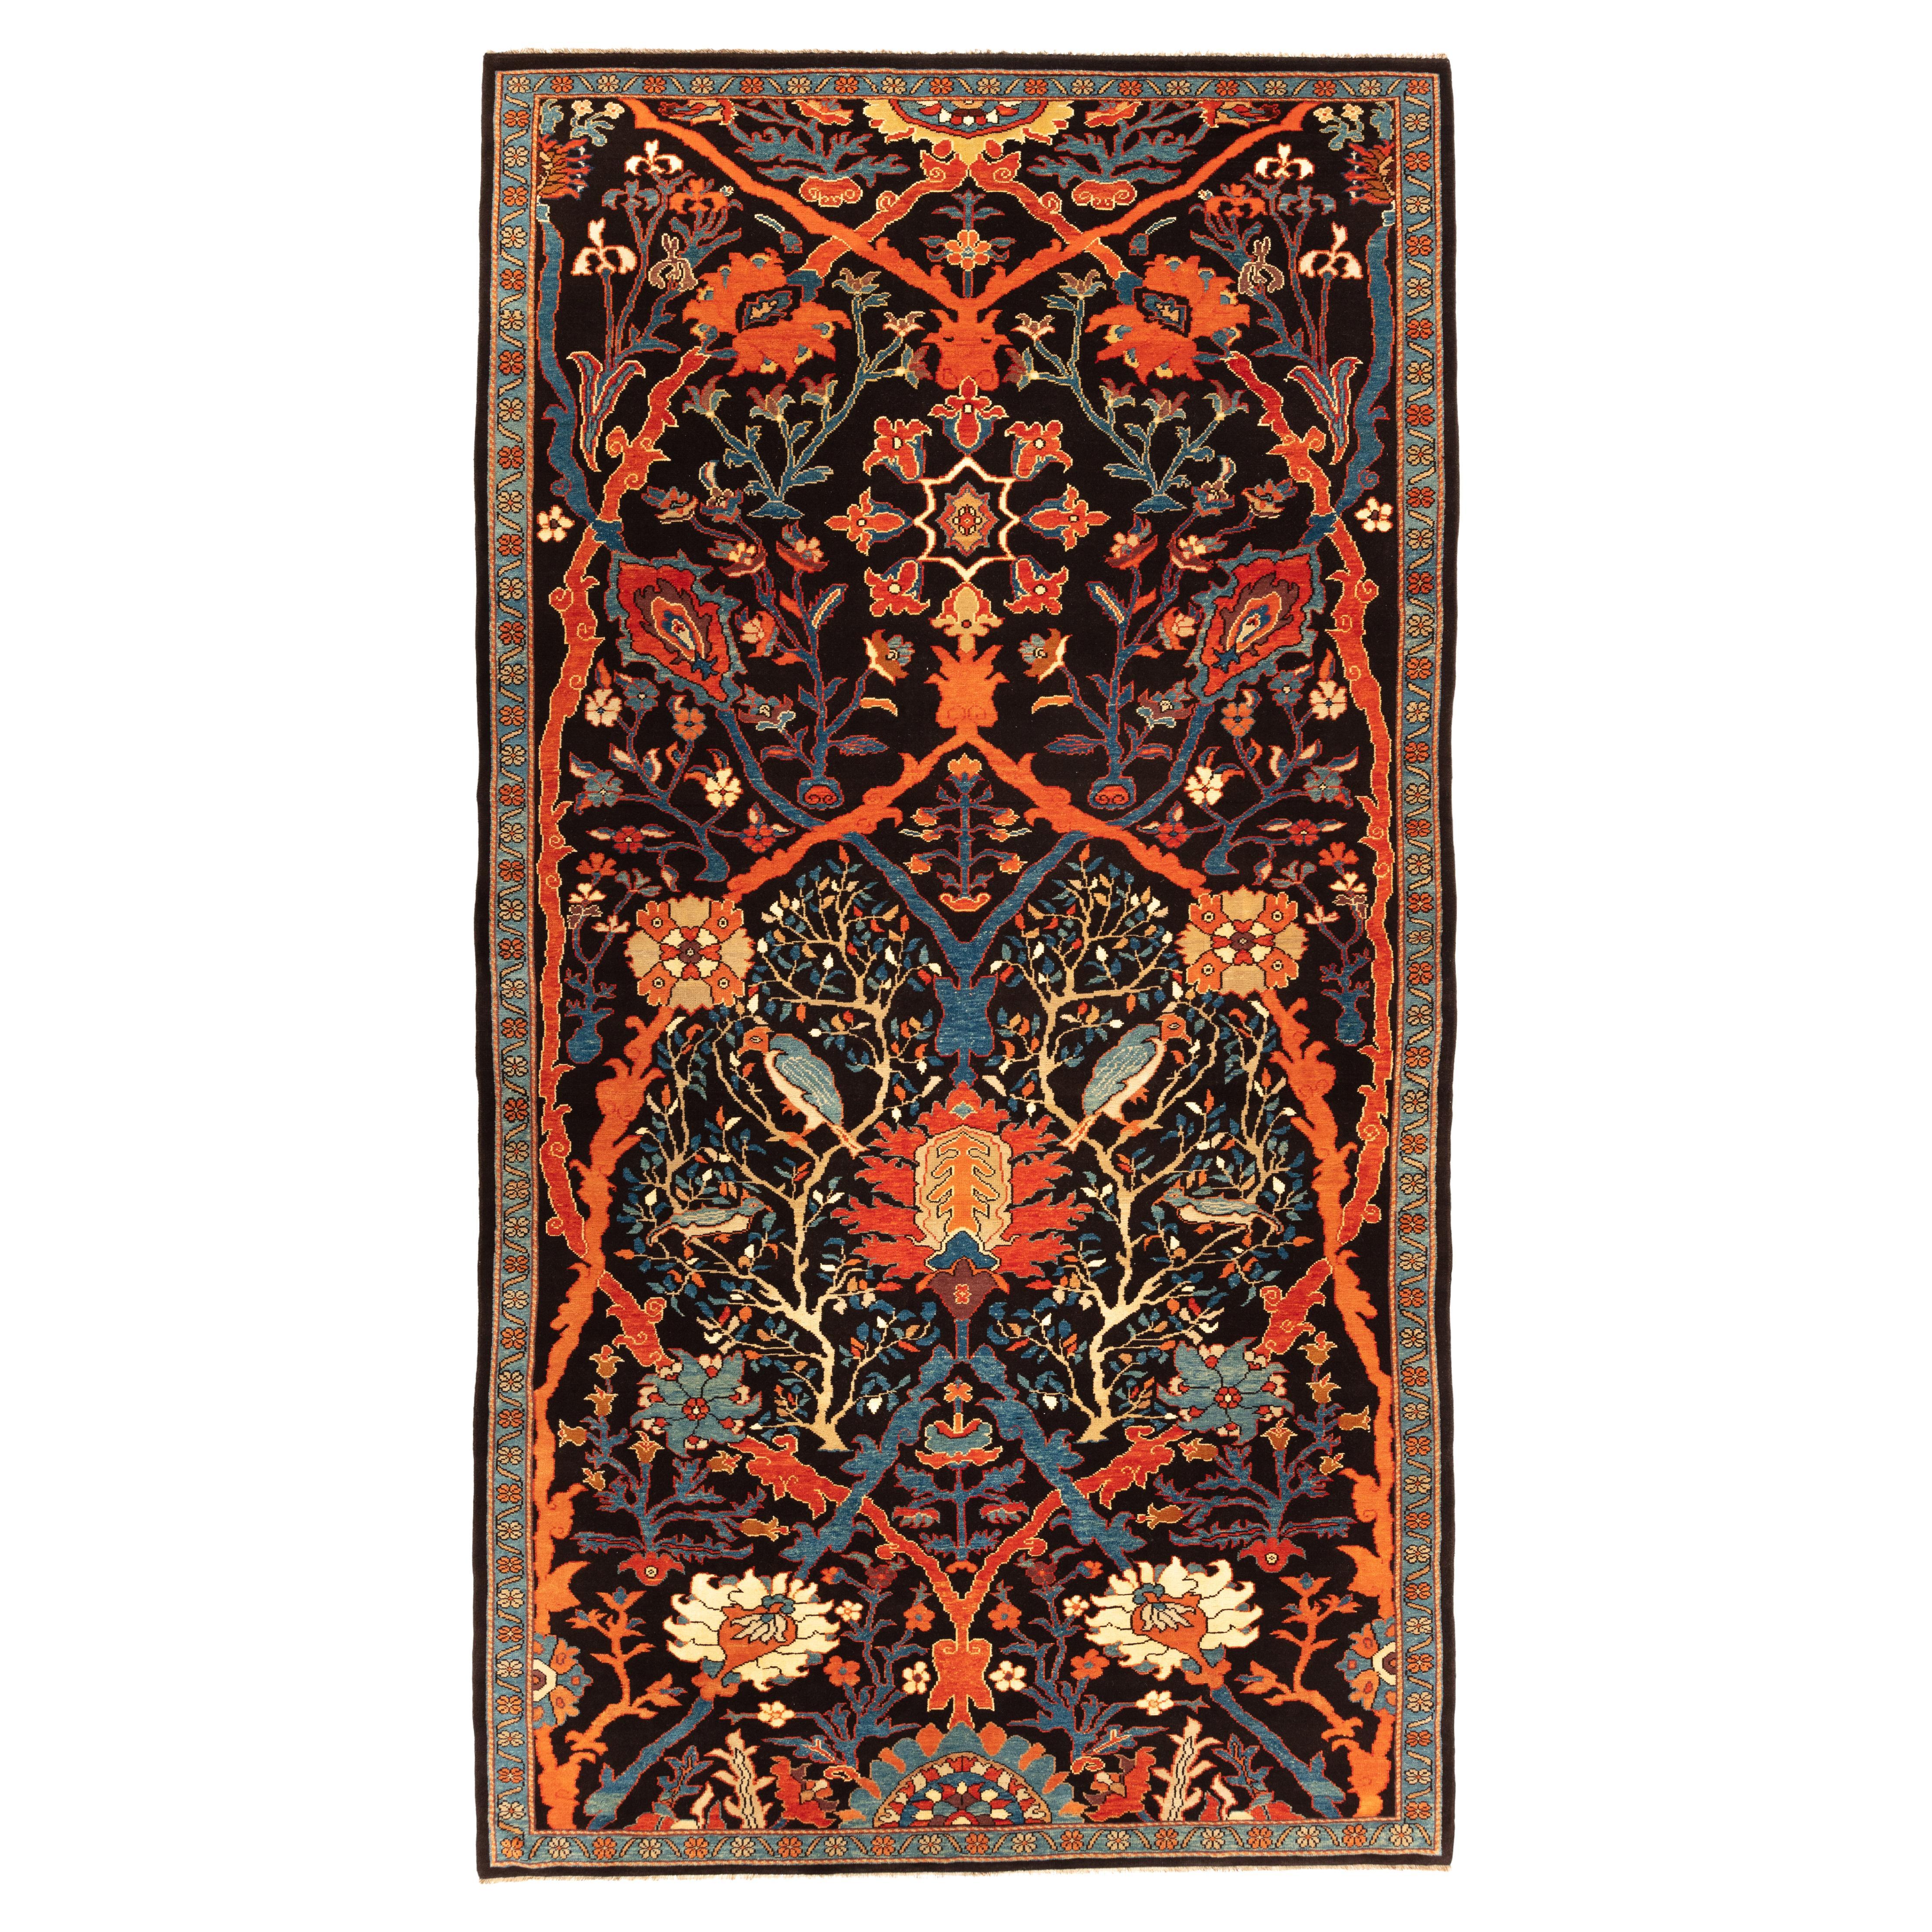 Ararat Rugs Gerous Bidjar Rug with Garden of Birds, Revival Carpet Natural Dyed For Sale